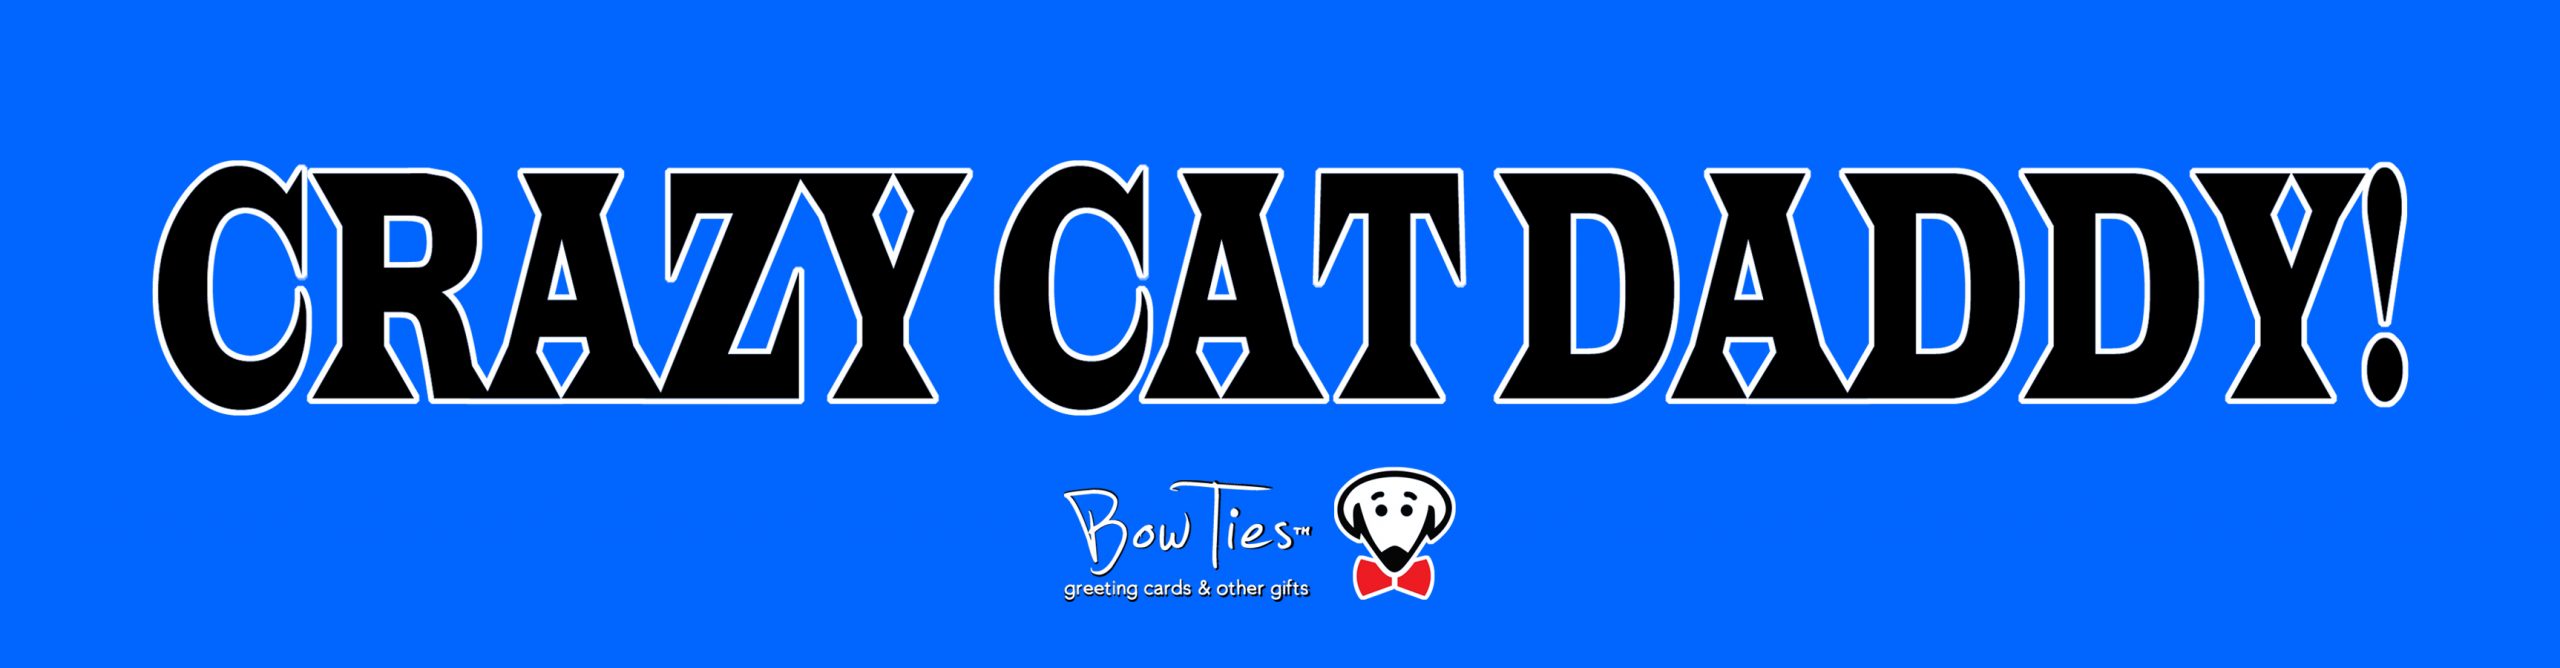 crazy cat daddy sticker_edited-1